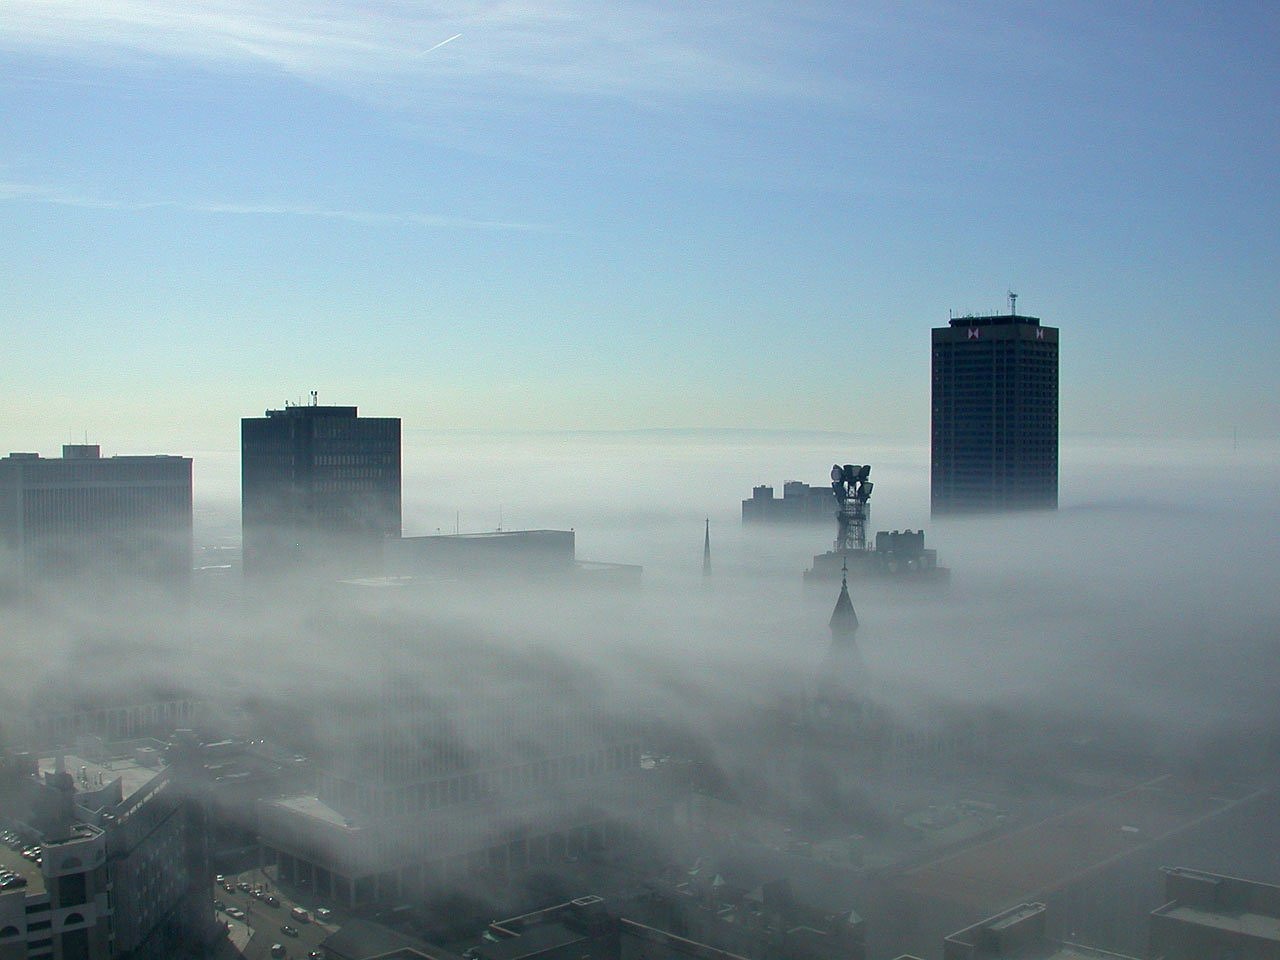 Условиях сильного тумана. Город в тумане. Туманный город. Густой туман в городе. Сильный туман в городе.